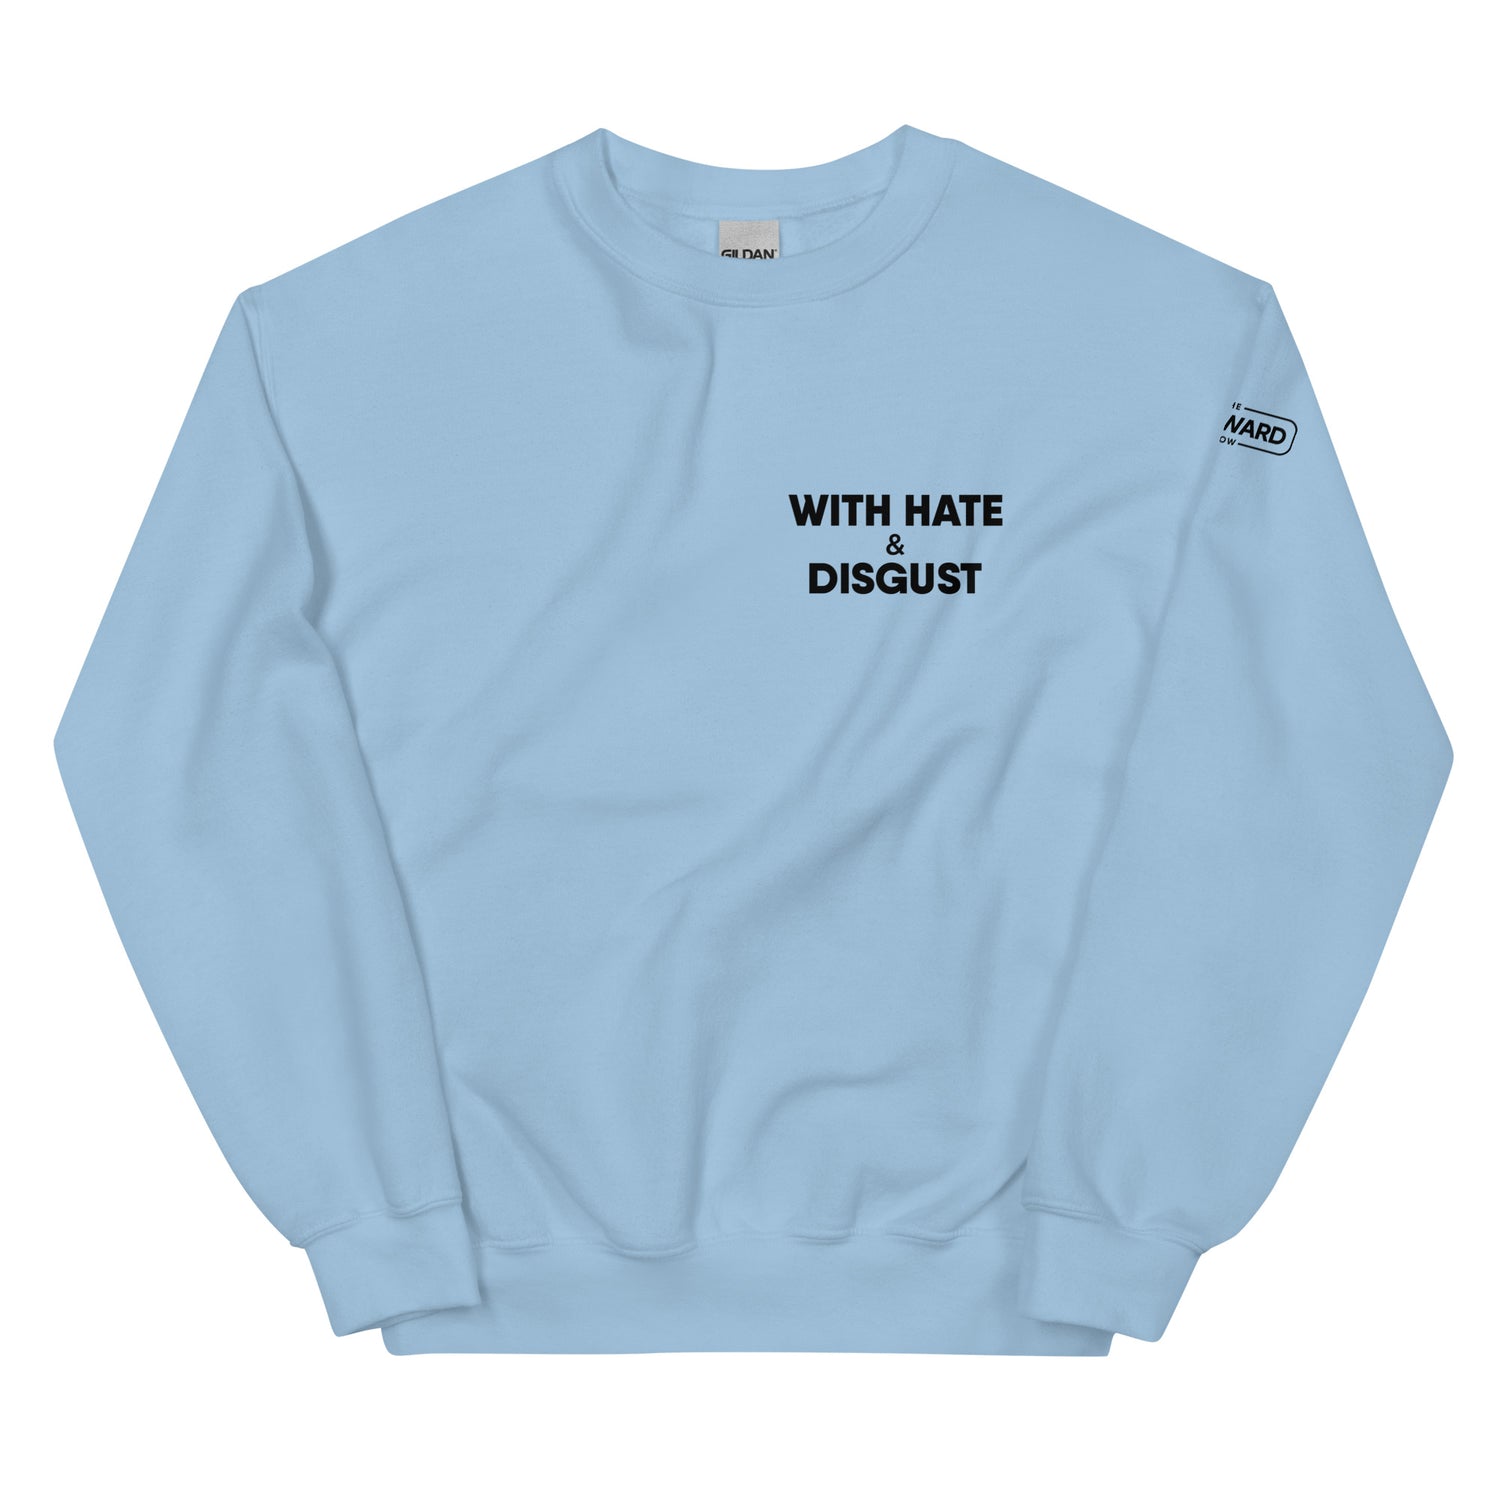 Hate And Disgust Sweatshirt - Light Blue